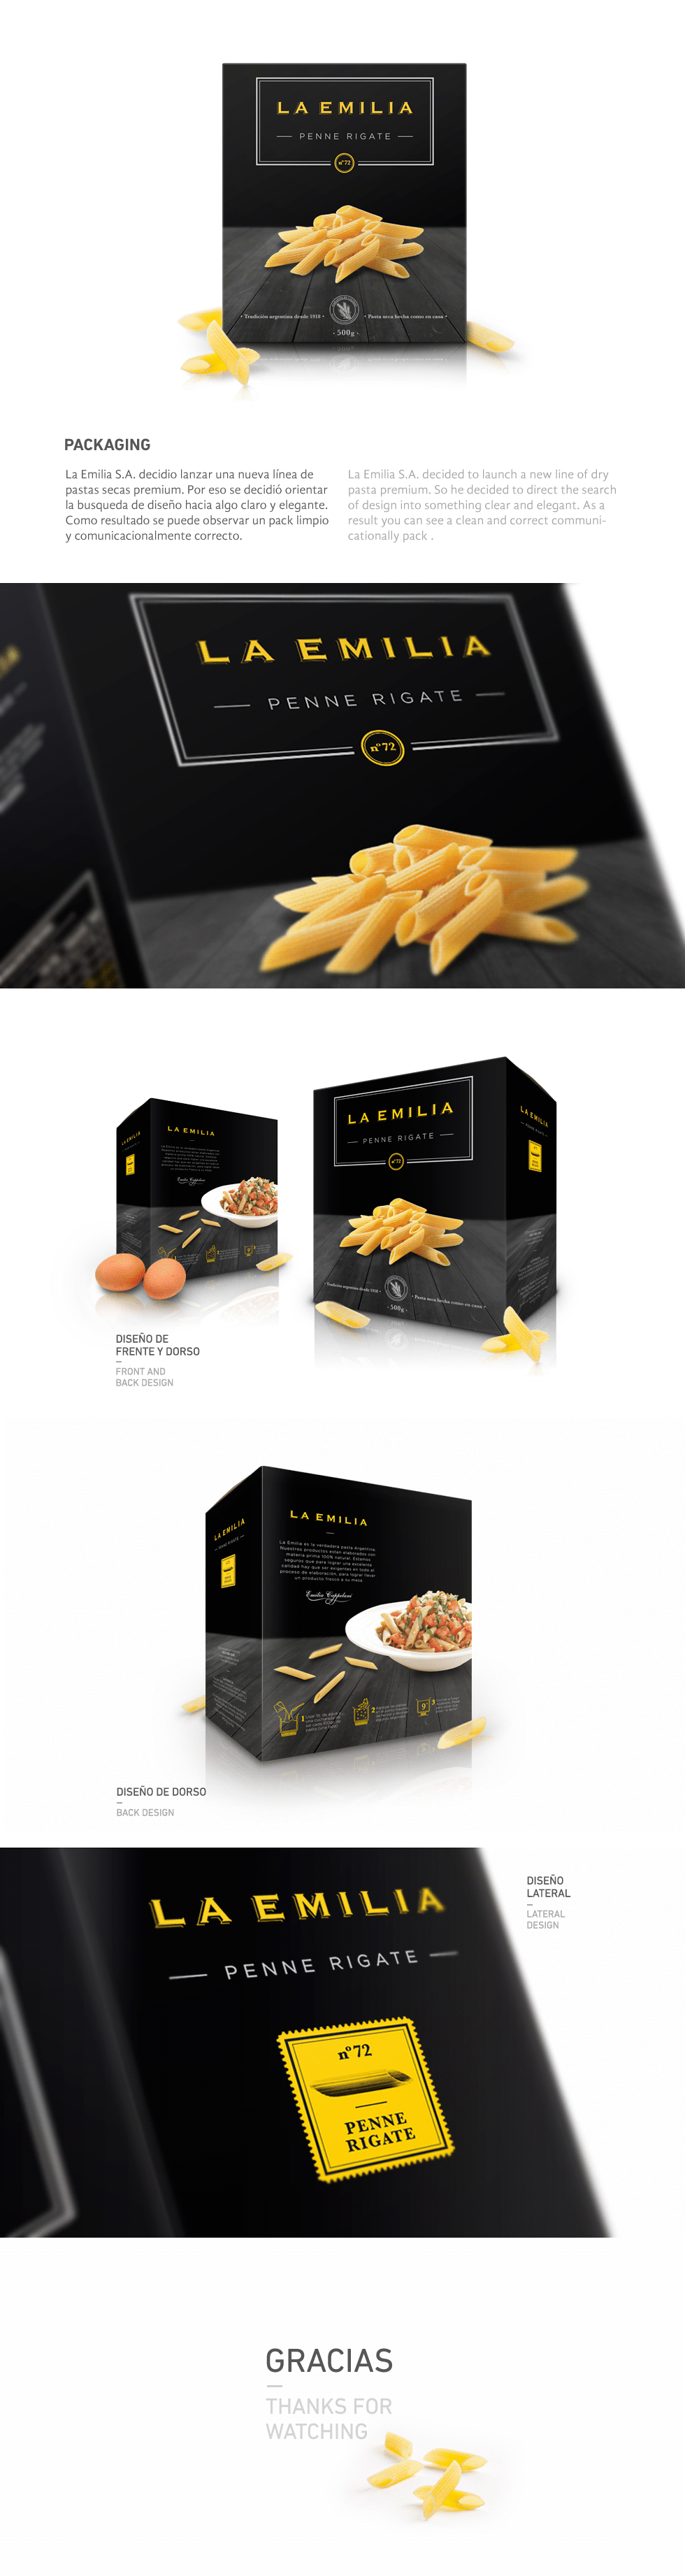 marca diseño gráfico brand Pack fideos Pasta excelence excelencia premium